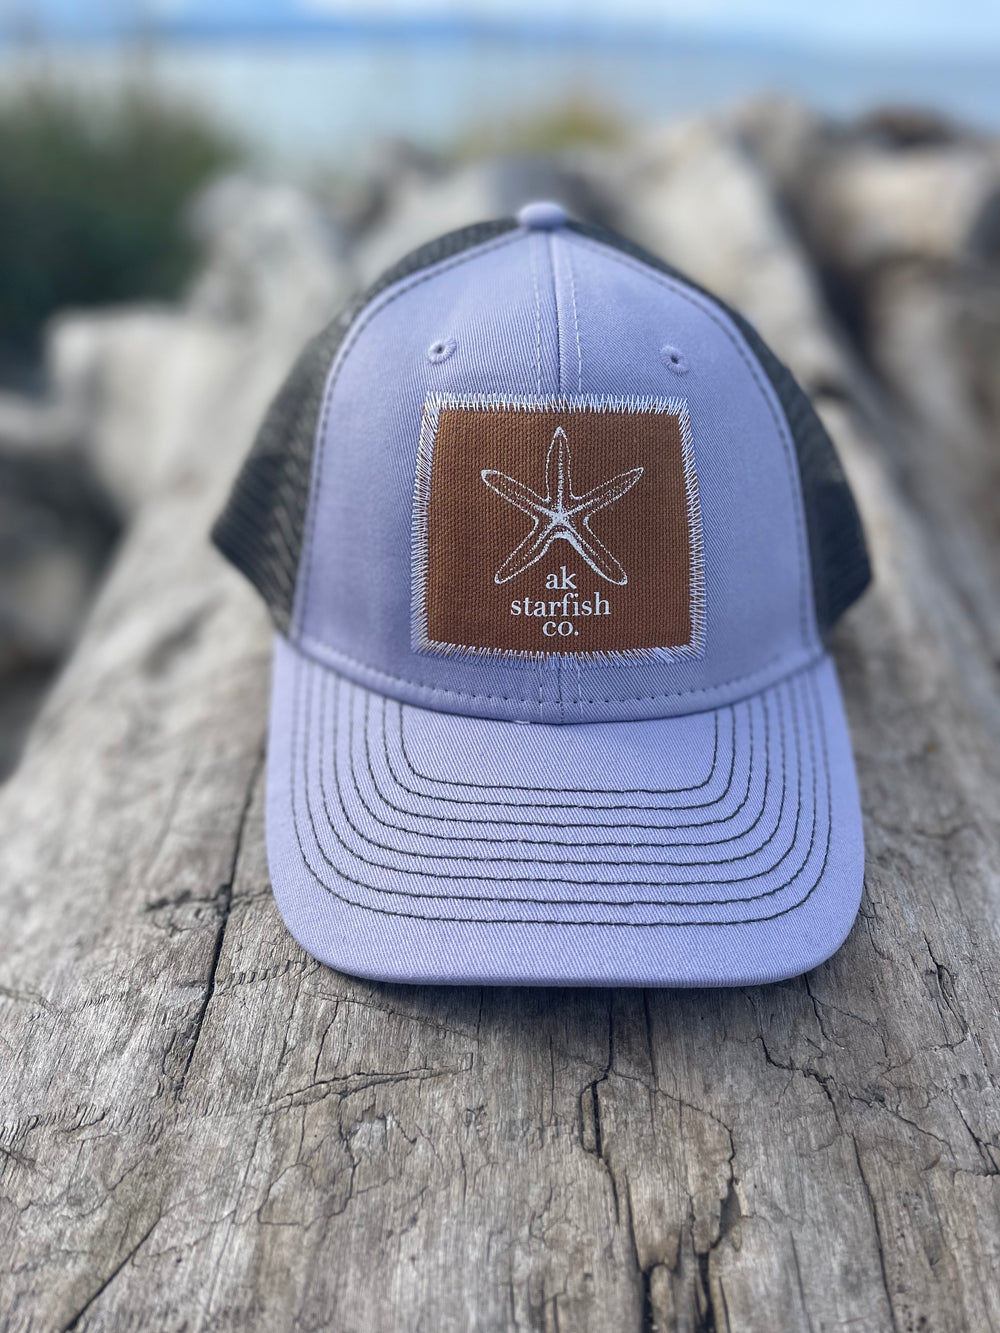 Alpenglow / Slate AK Starfish Co. Patch Hat. $38.00